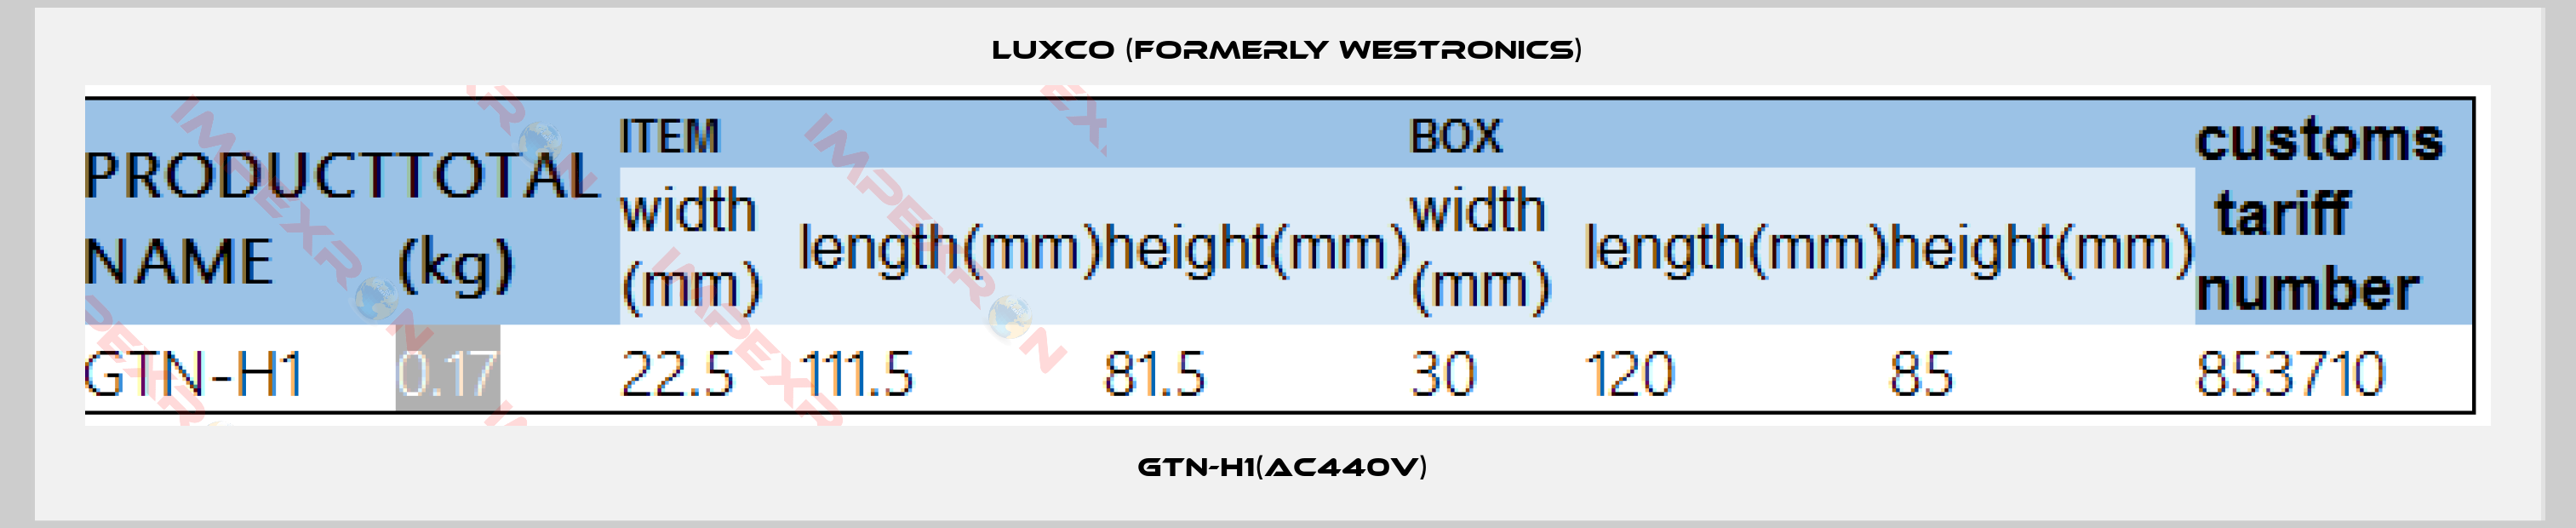 Luxco (formerly Westronics)-GTN-H1(AC440V) 